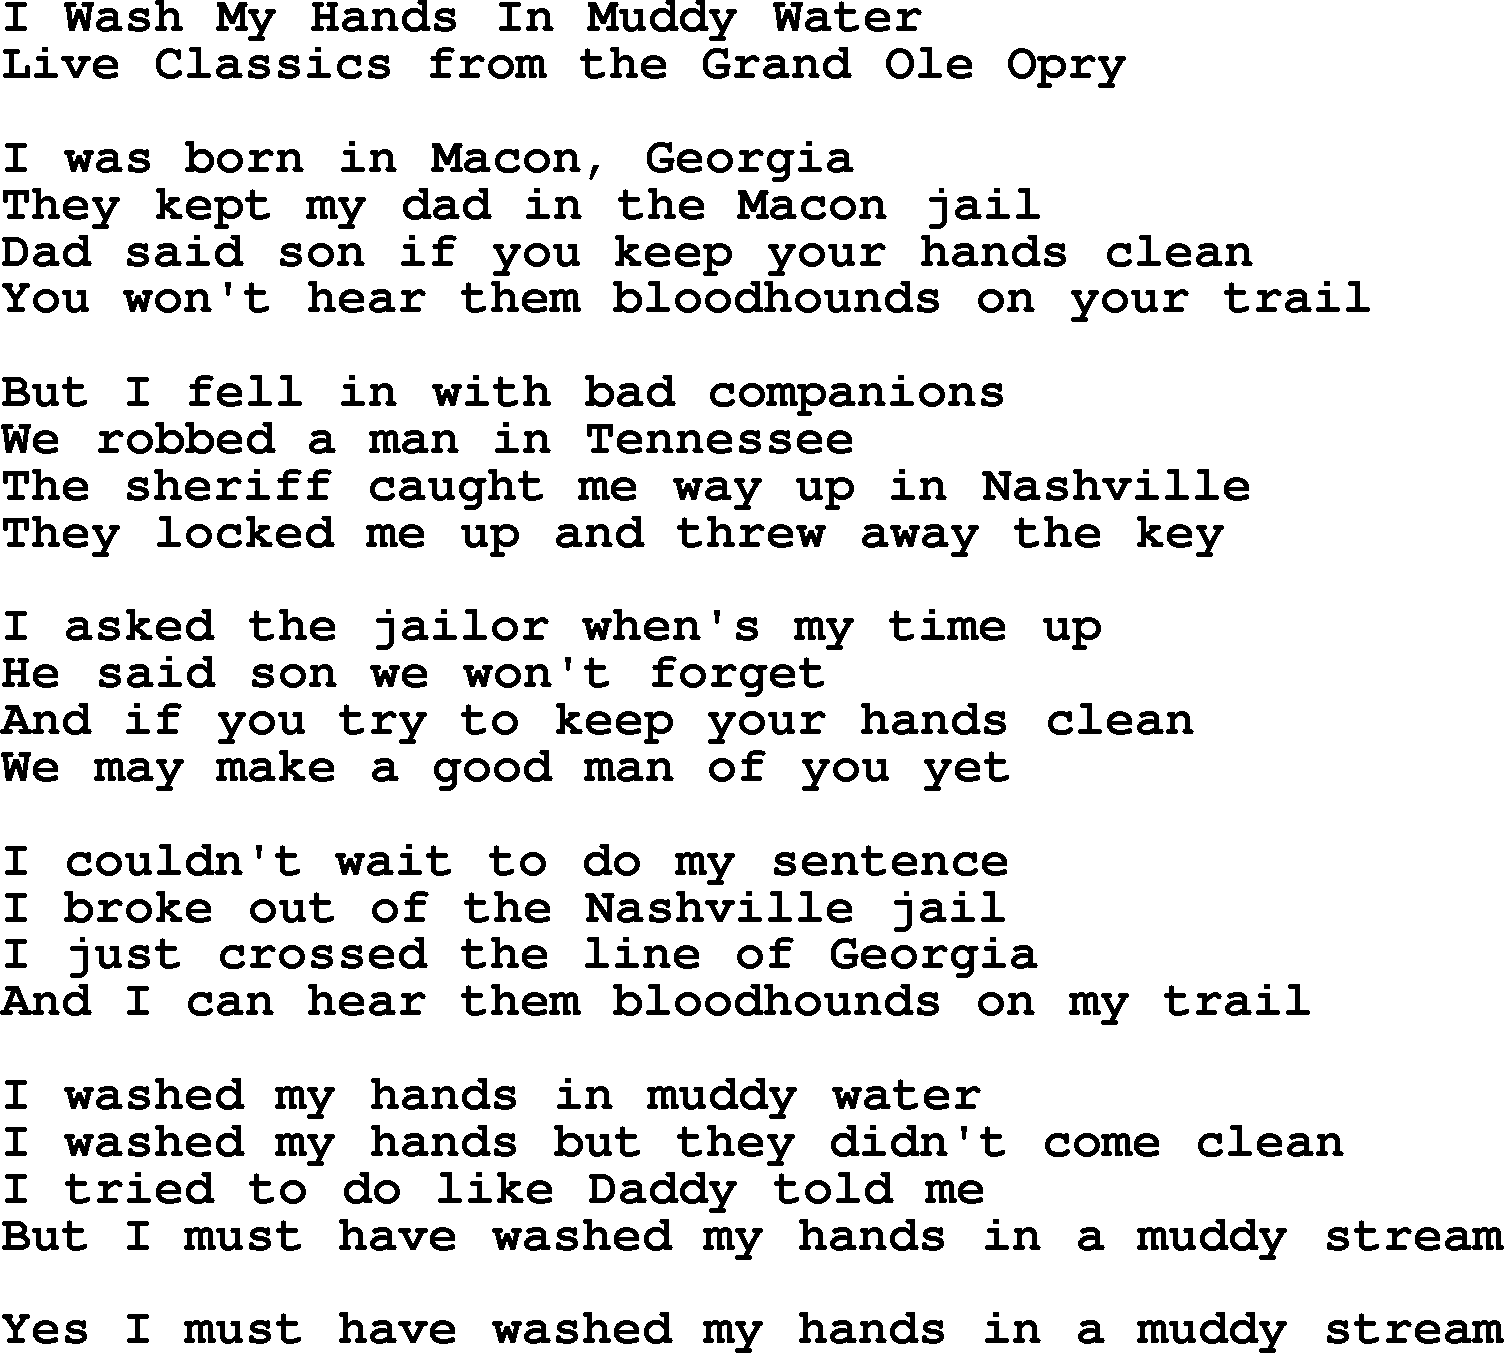 Marty Robbins song: I Wash My Hands In Muddy Water, lyrics